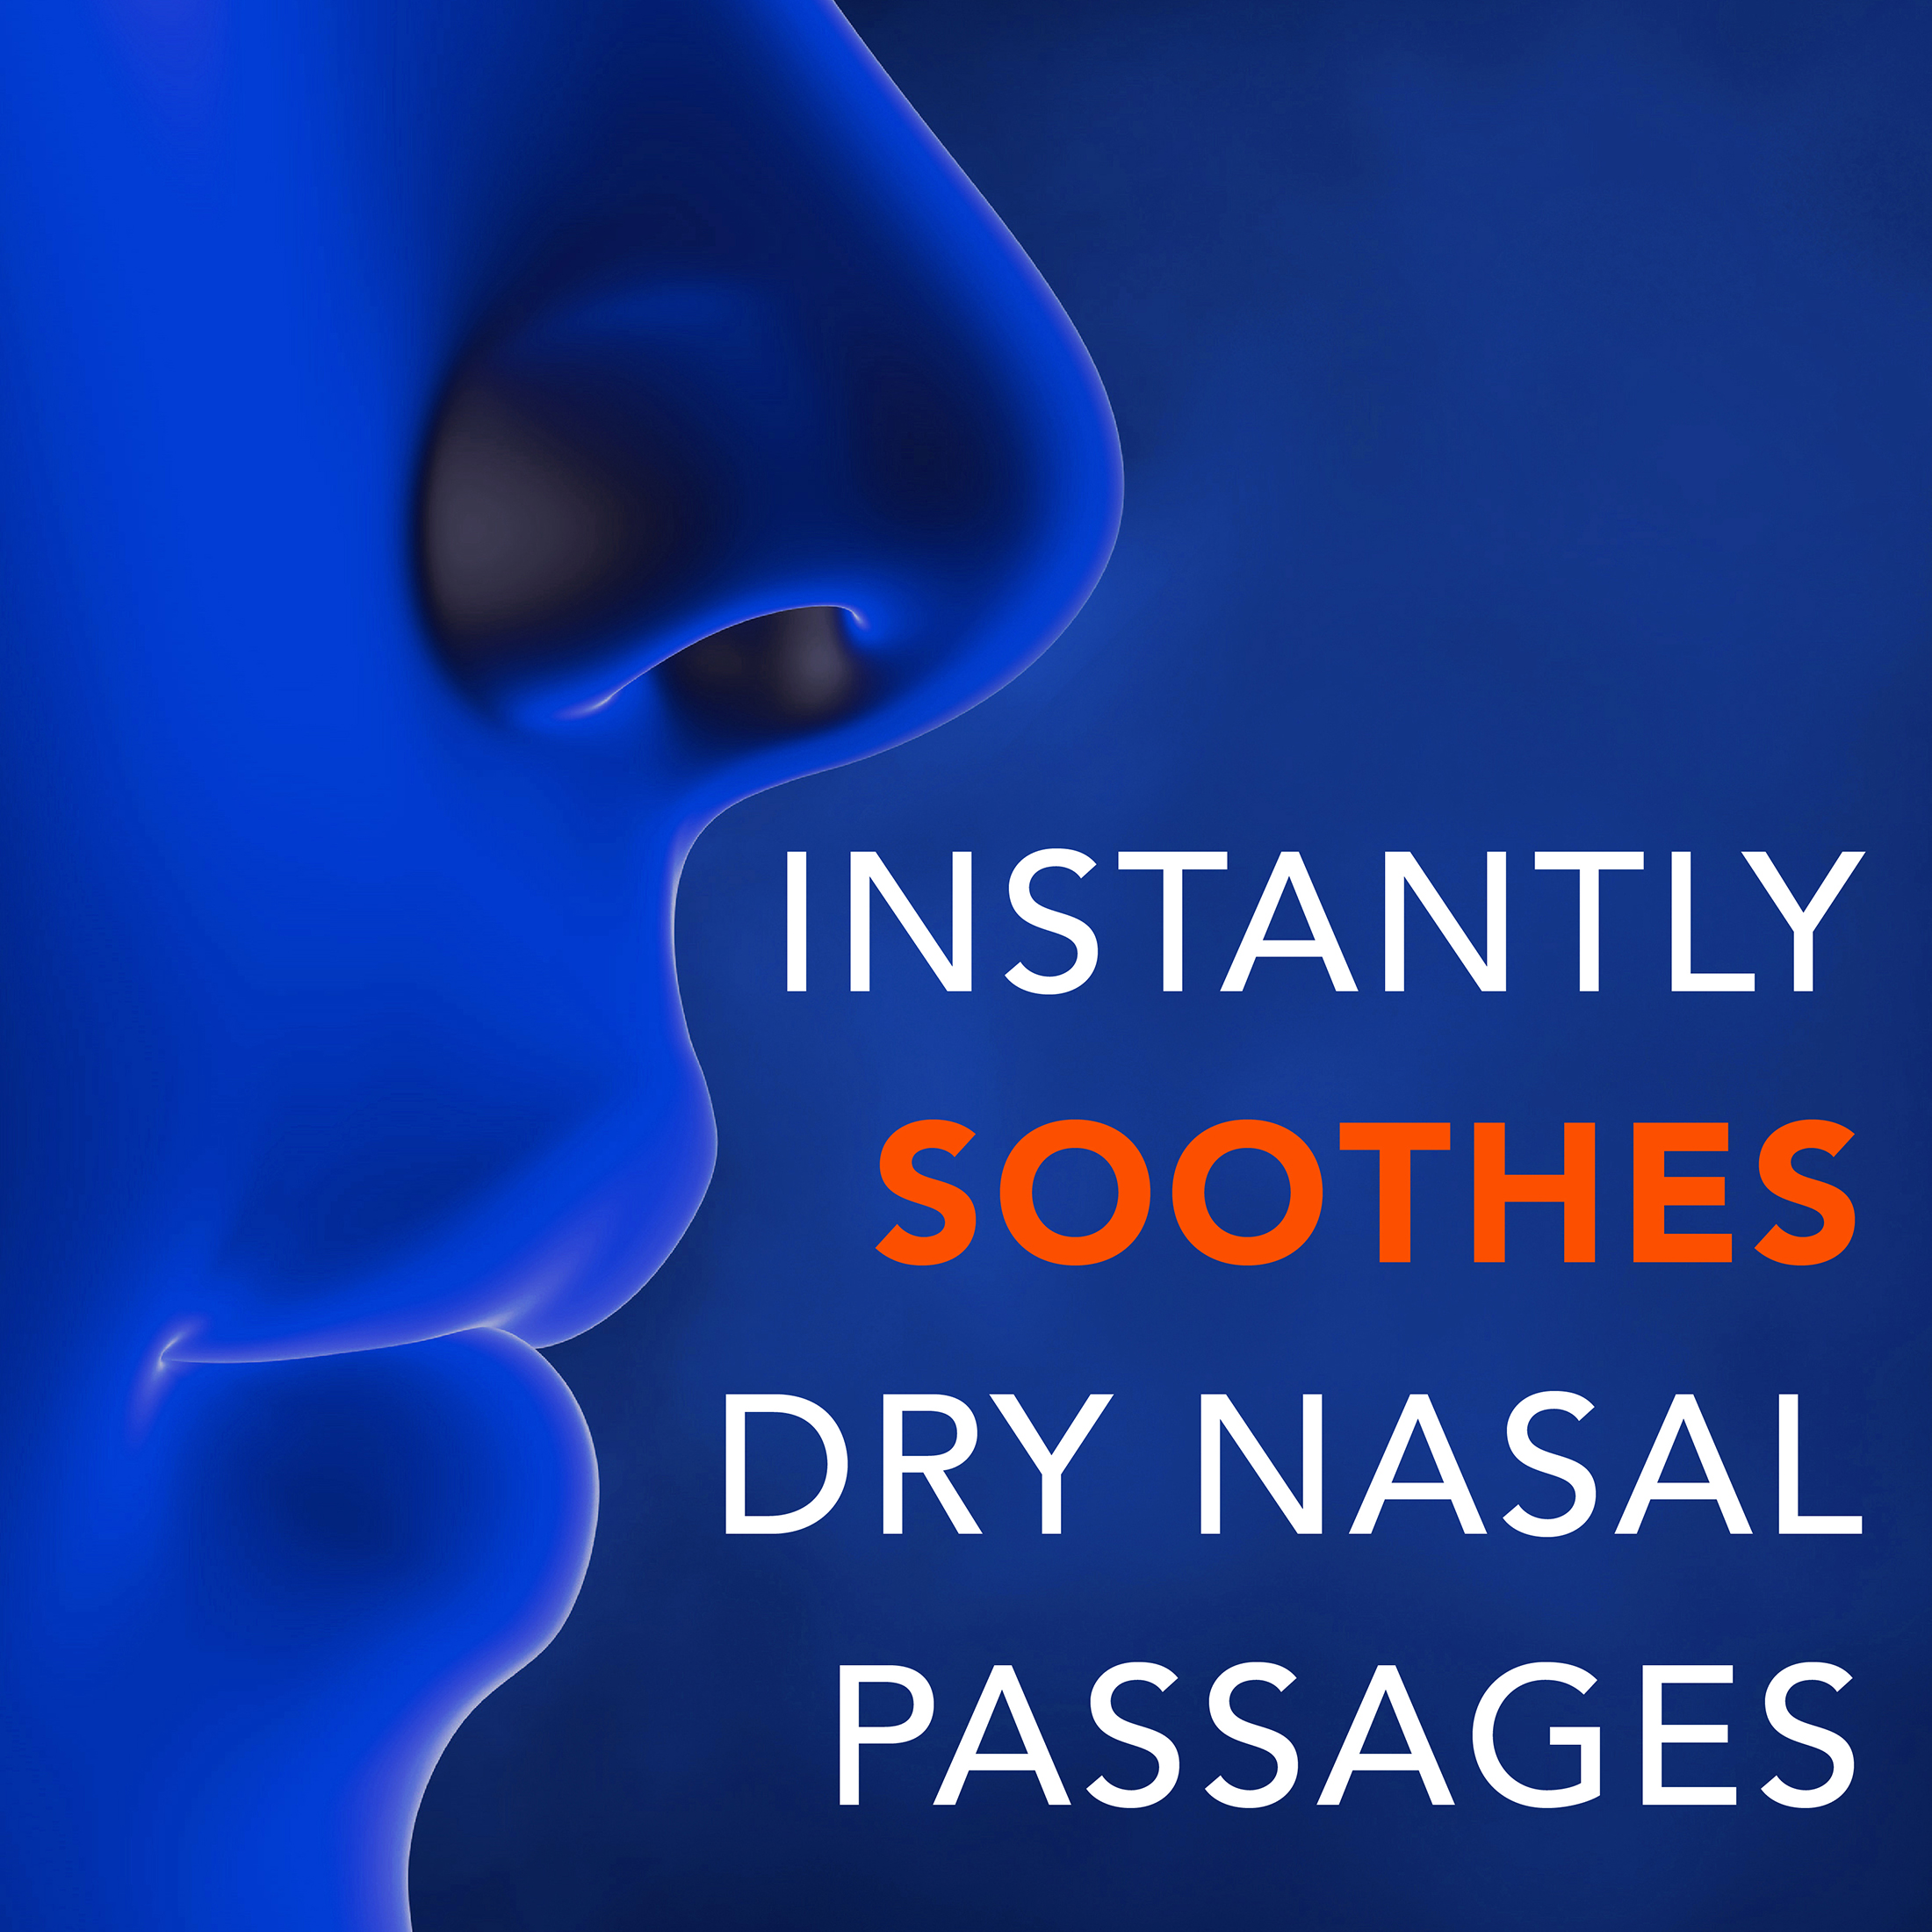 Equate Premium Saline Nasal Moisturizing Spray, 1.5 fl oz - image 2 of 6